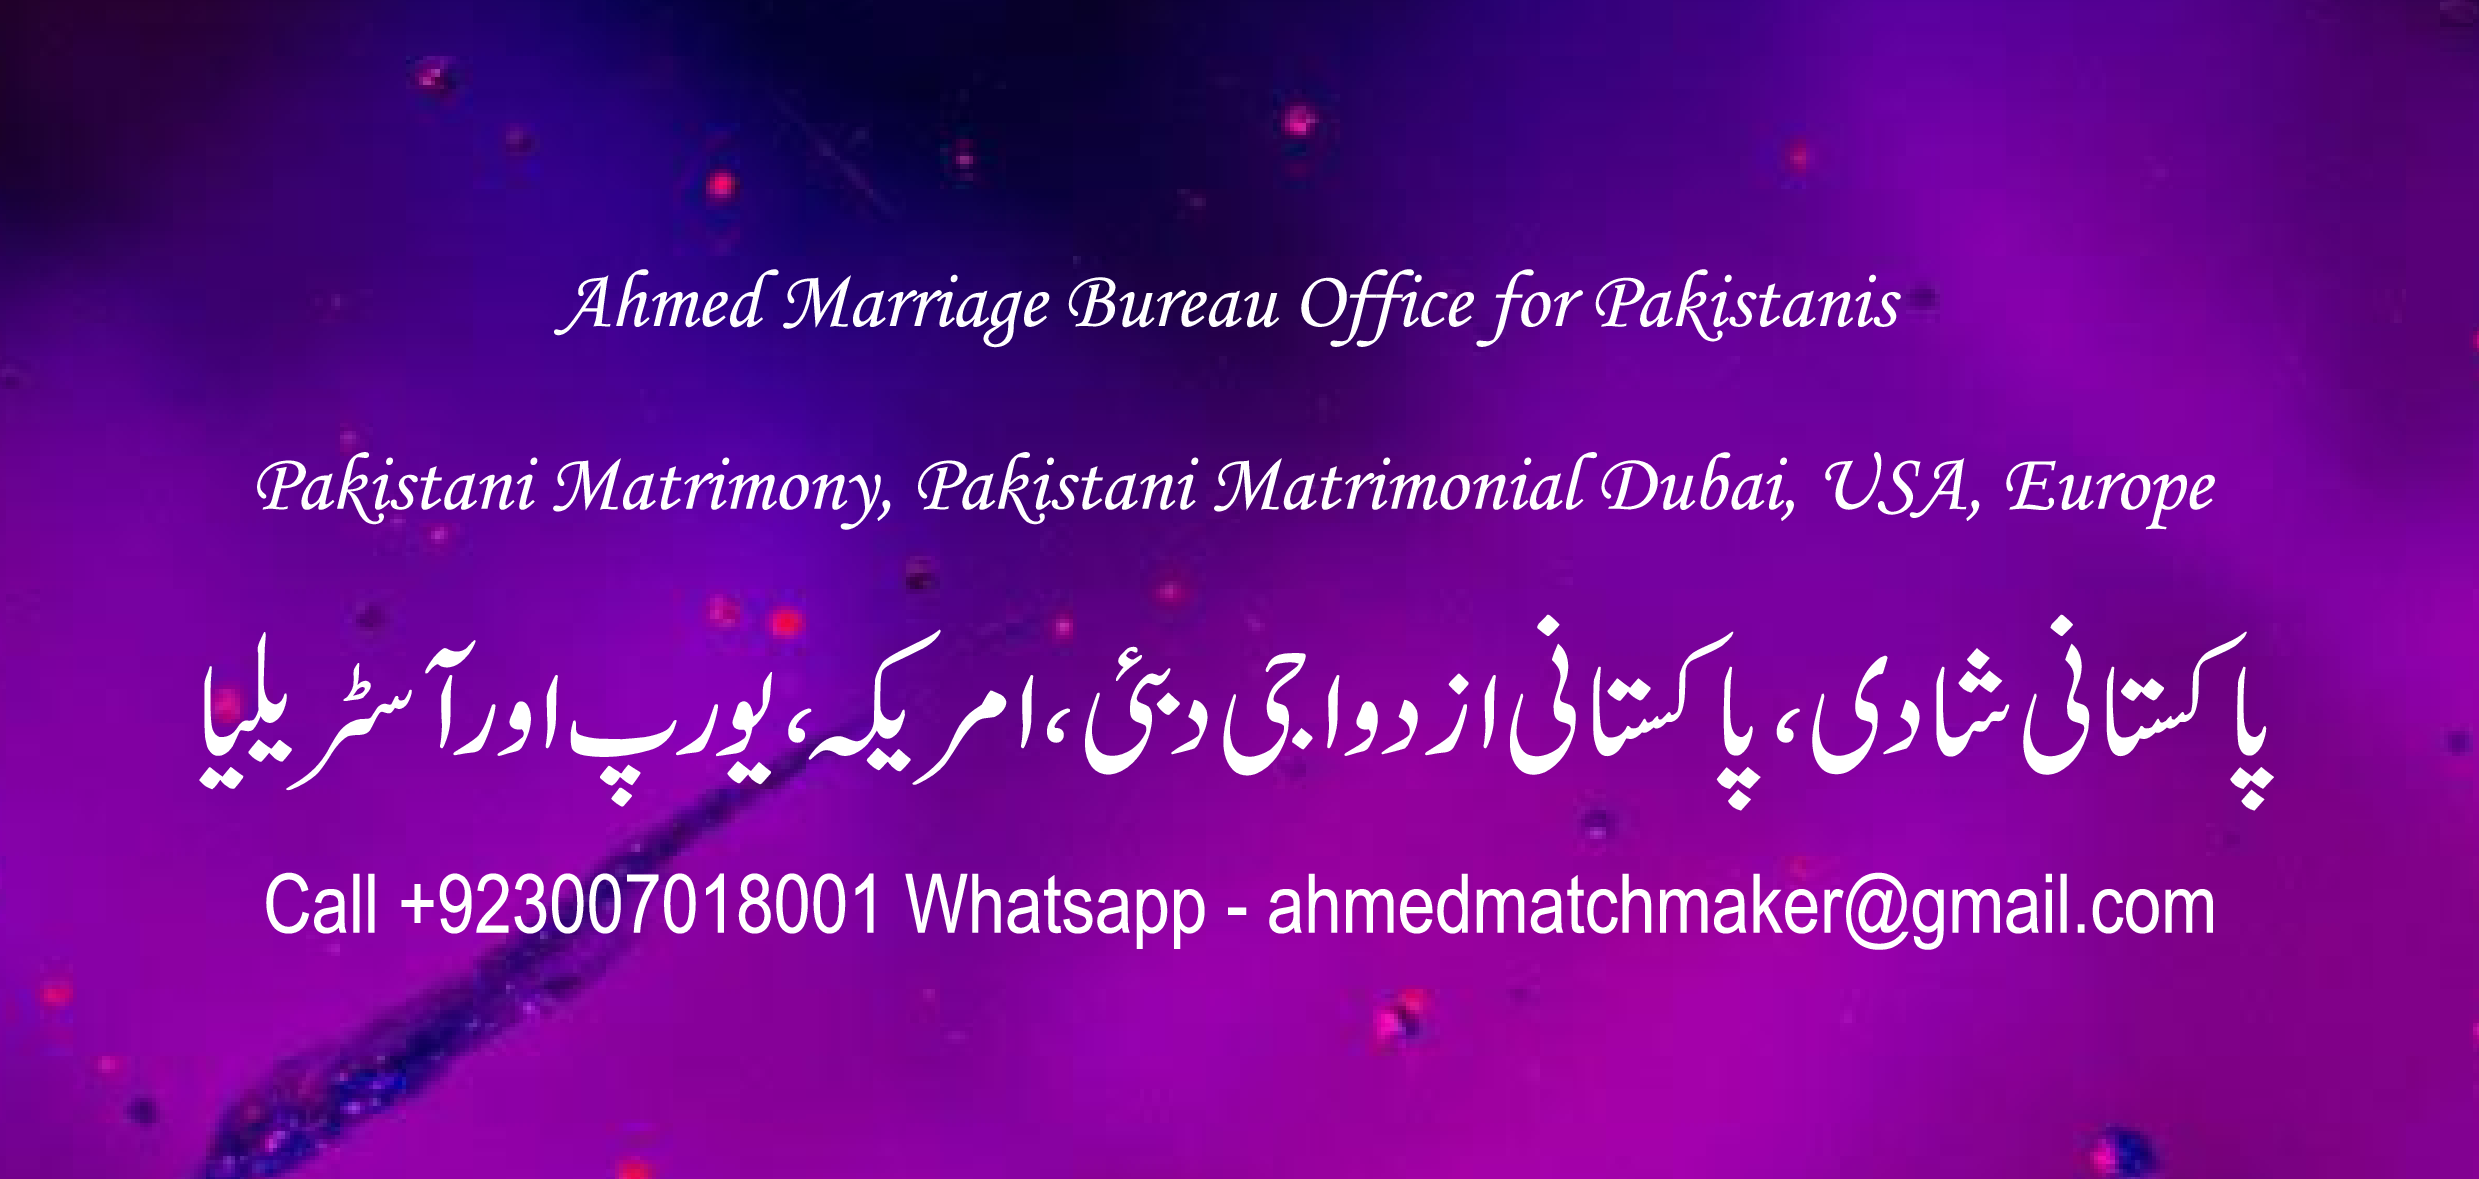 Pakistan-marriage-bureau-shaadi-matrimonial-America-Canada-Australia-Dubai-Europe-34.png